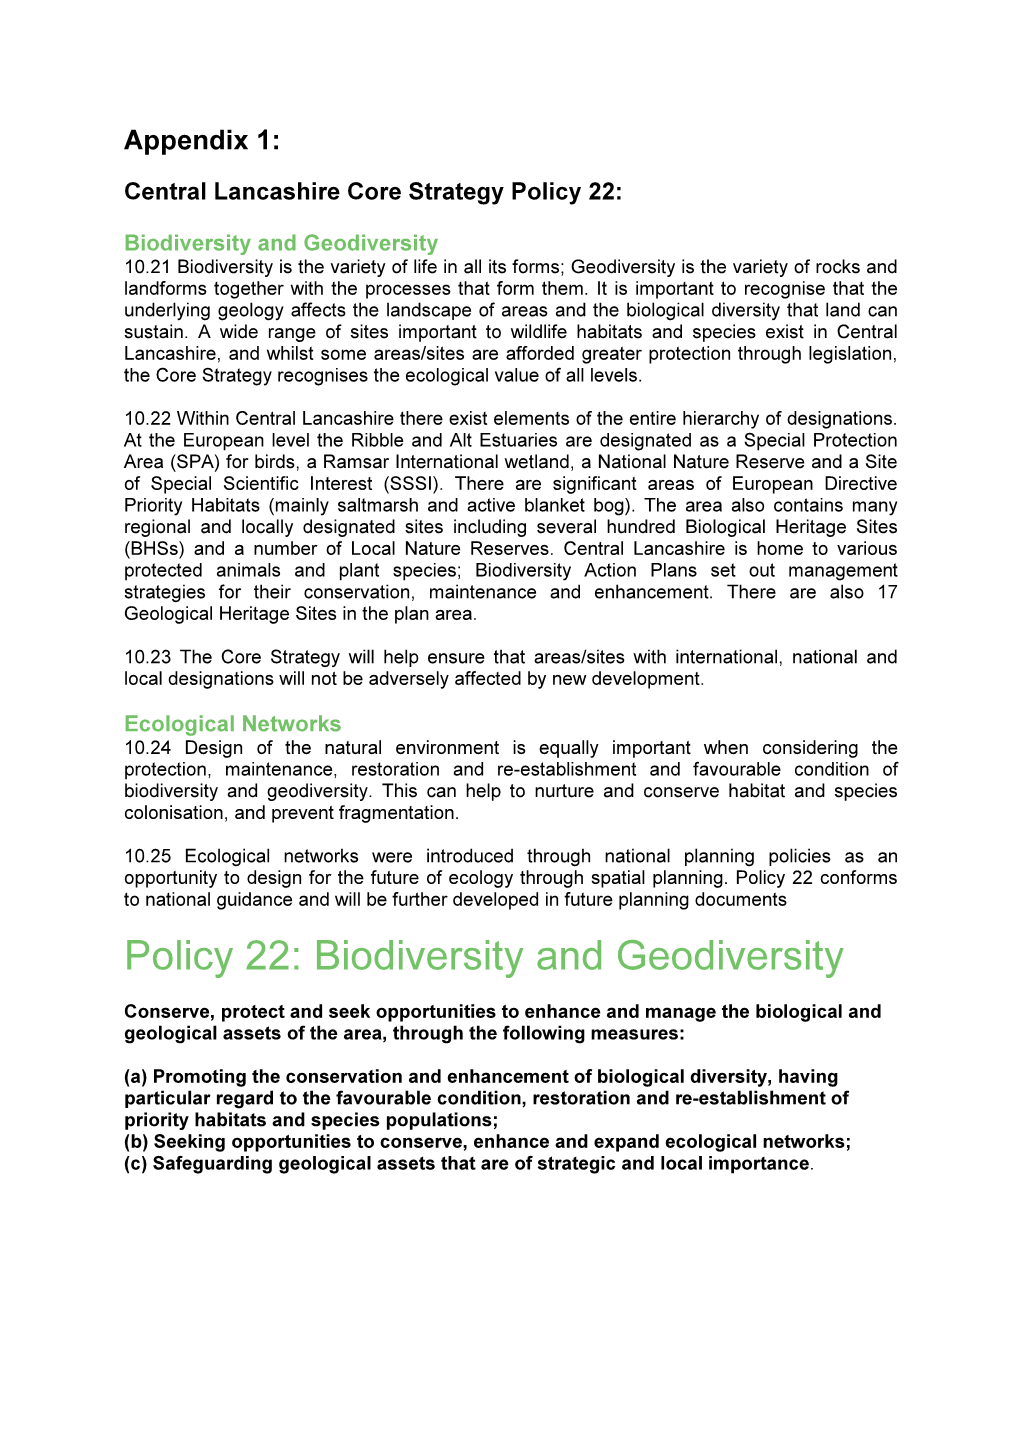 Policy 22: Biodiversity and Geodiversity